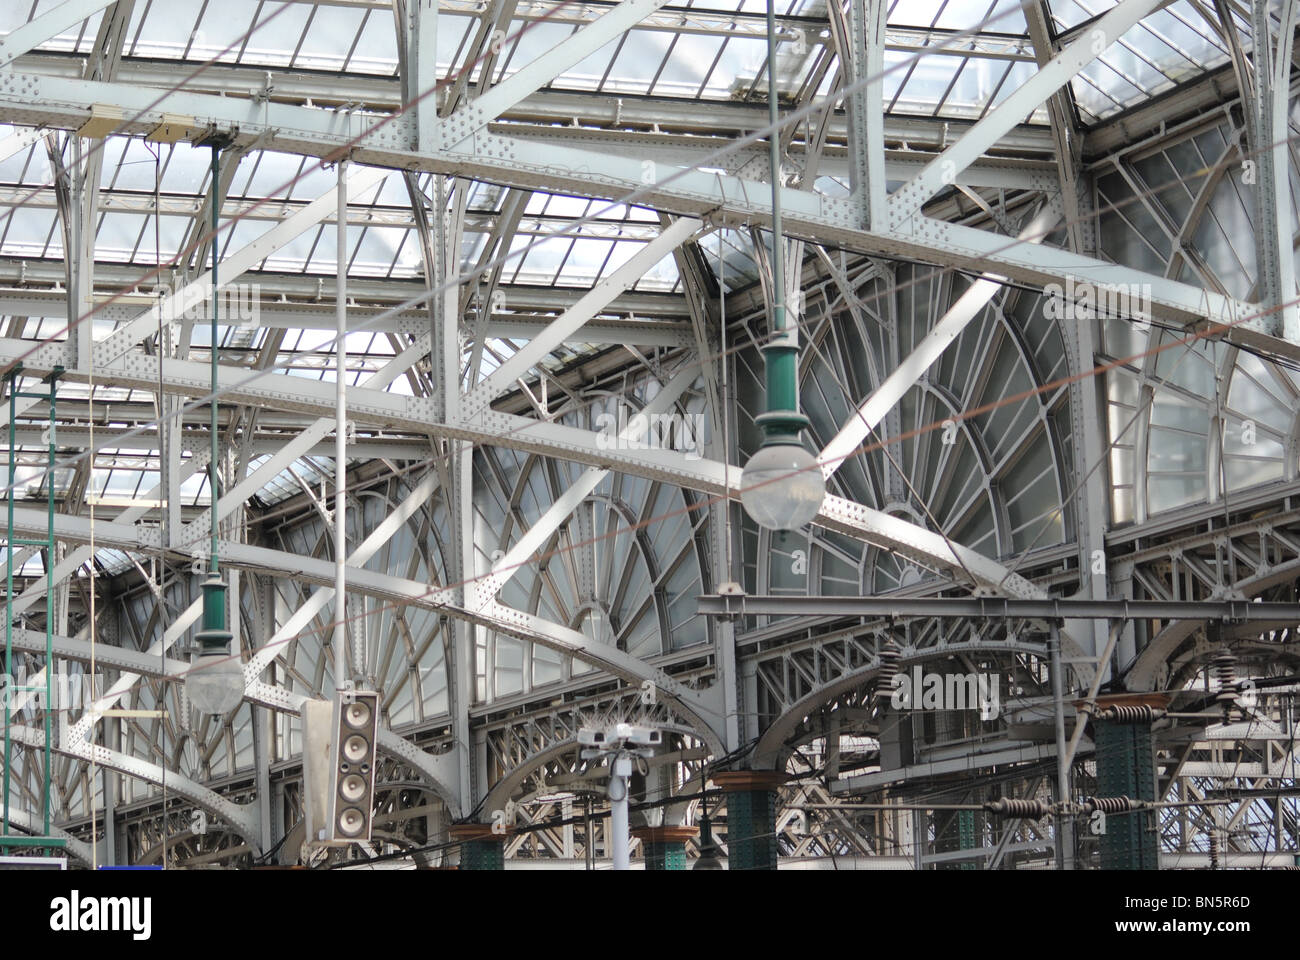 Interne Architektur - Glasgow Central Railway Station. Stockfoto